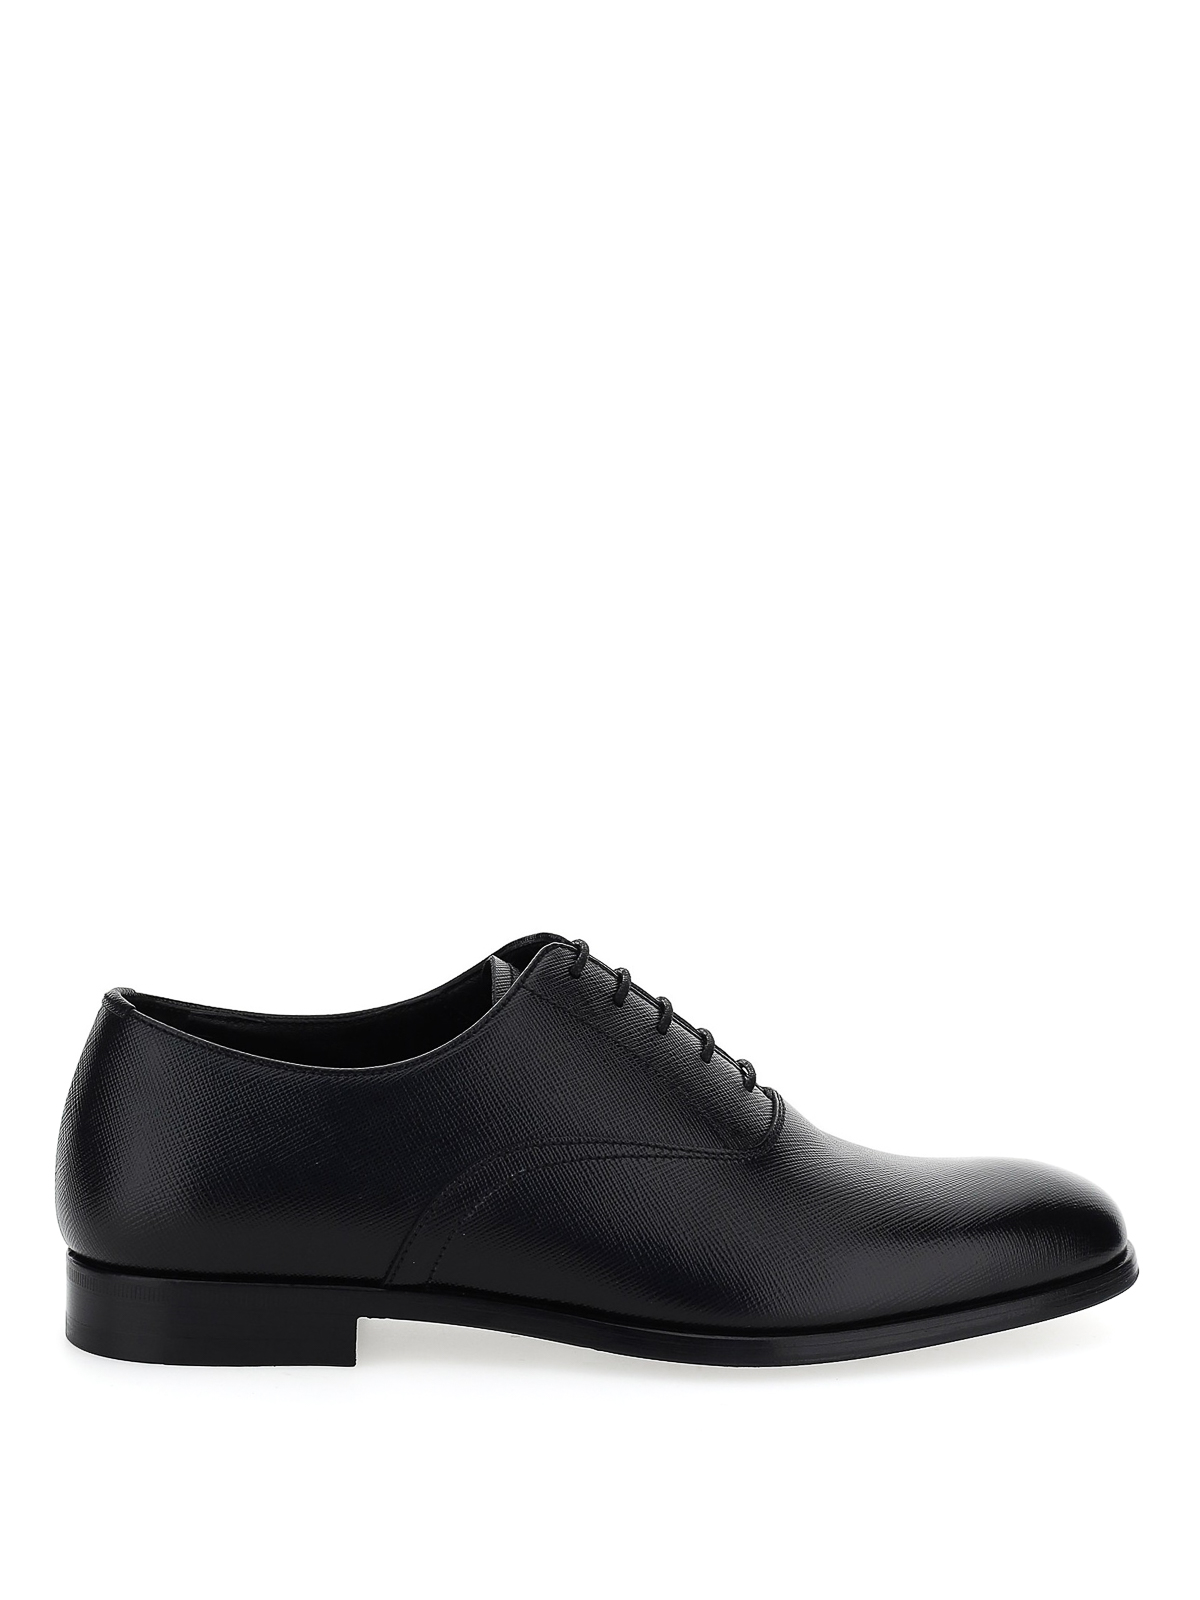 Prada - Saffiano leather Oxford shoes 